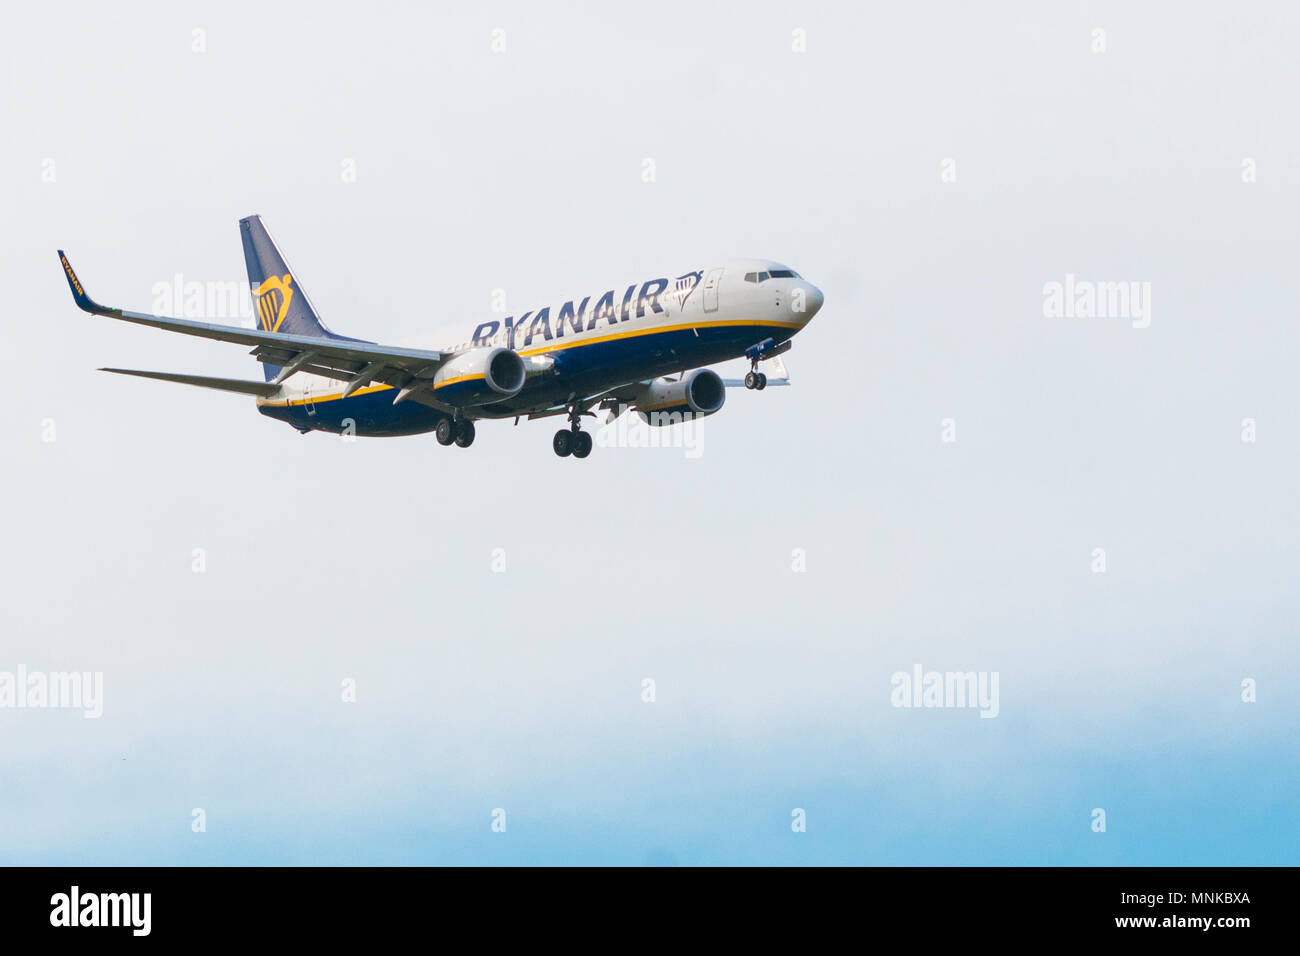 PISA, ITALY - JANUARY 15, 2017 - A Ryanair Boeing 737-600 lands at Pisa Airport (Galileo Galilei) Stock Photo